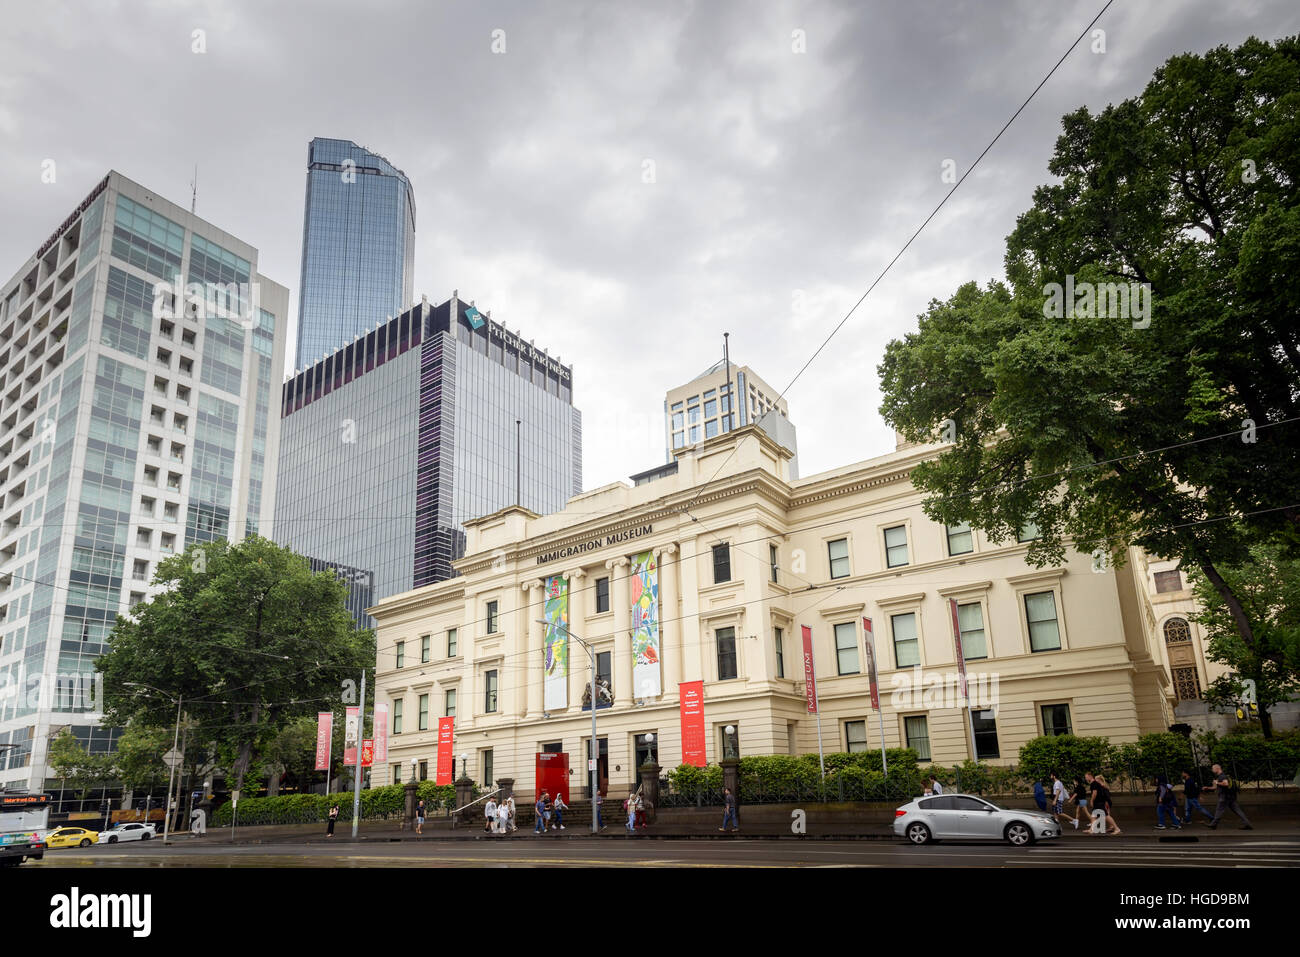 Melbourne, Australia - December 27, 2016: Melbourne Immigration Museum on Flinders Street. Stock Photo